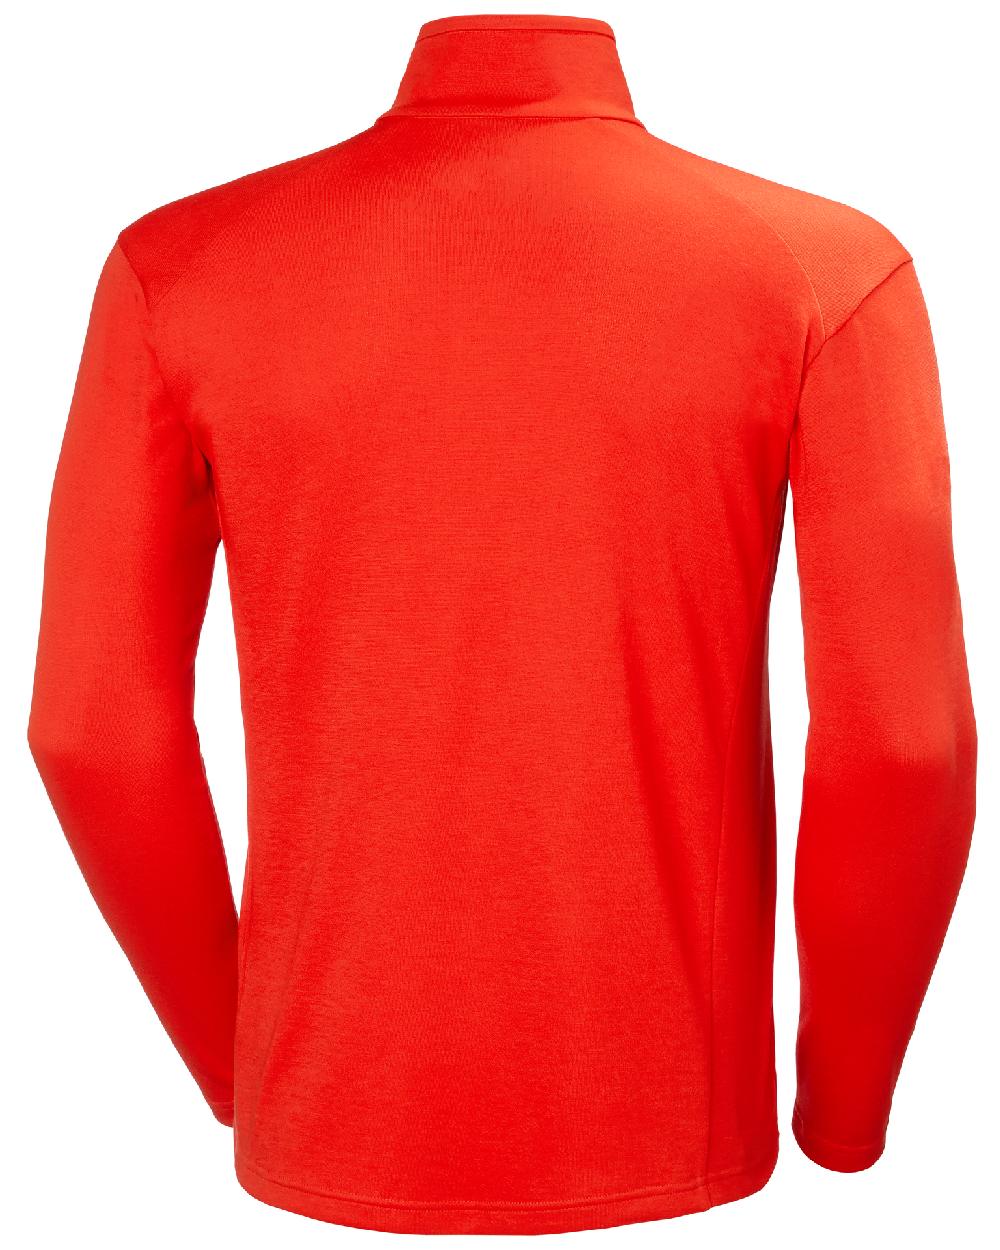 Alert Red coloured Helly Hansen Mens HP Half Zip Pullover Shirt on white background 